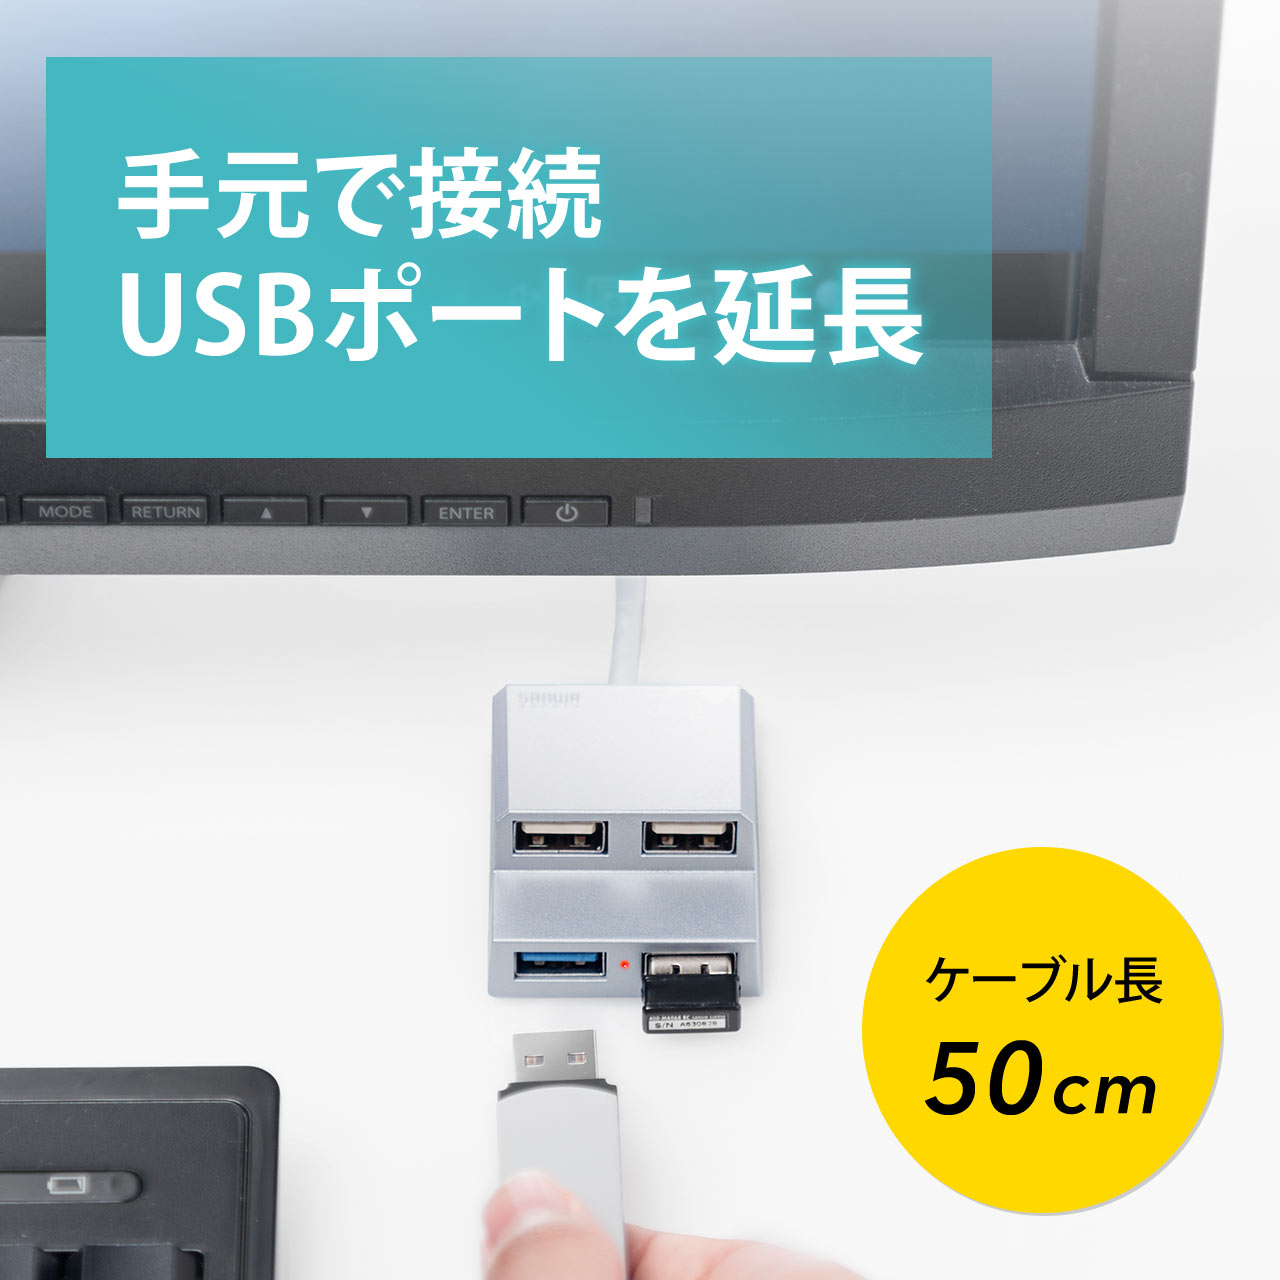 USB3.0{USB2.0R{nuiʃt@Xi[EVo[j 400-HUB055S